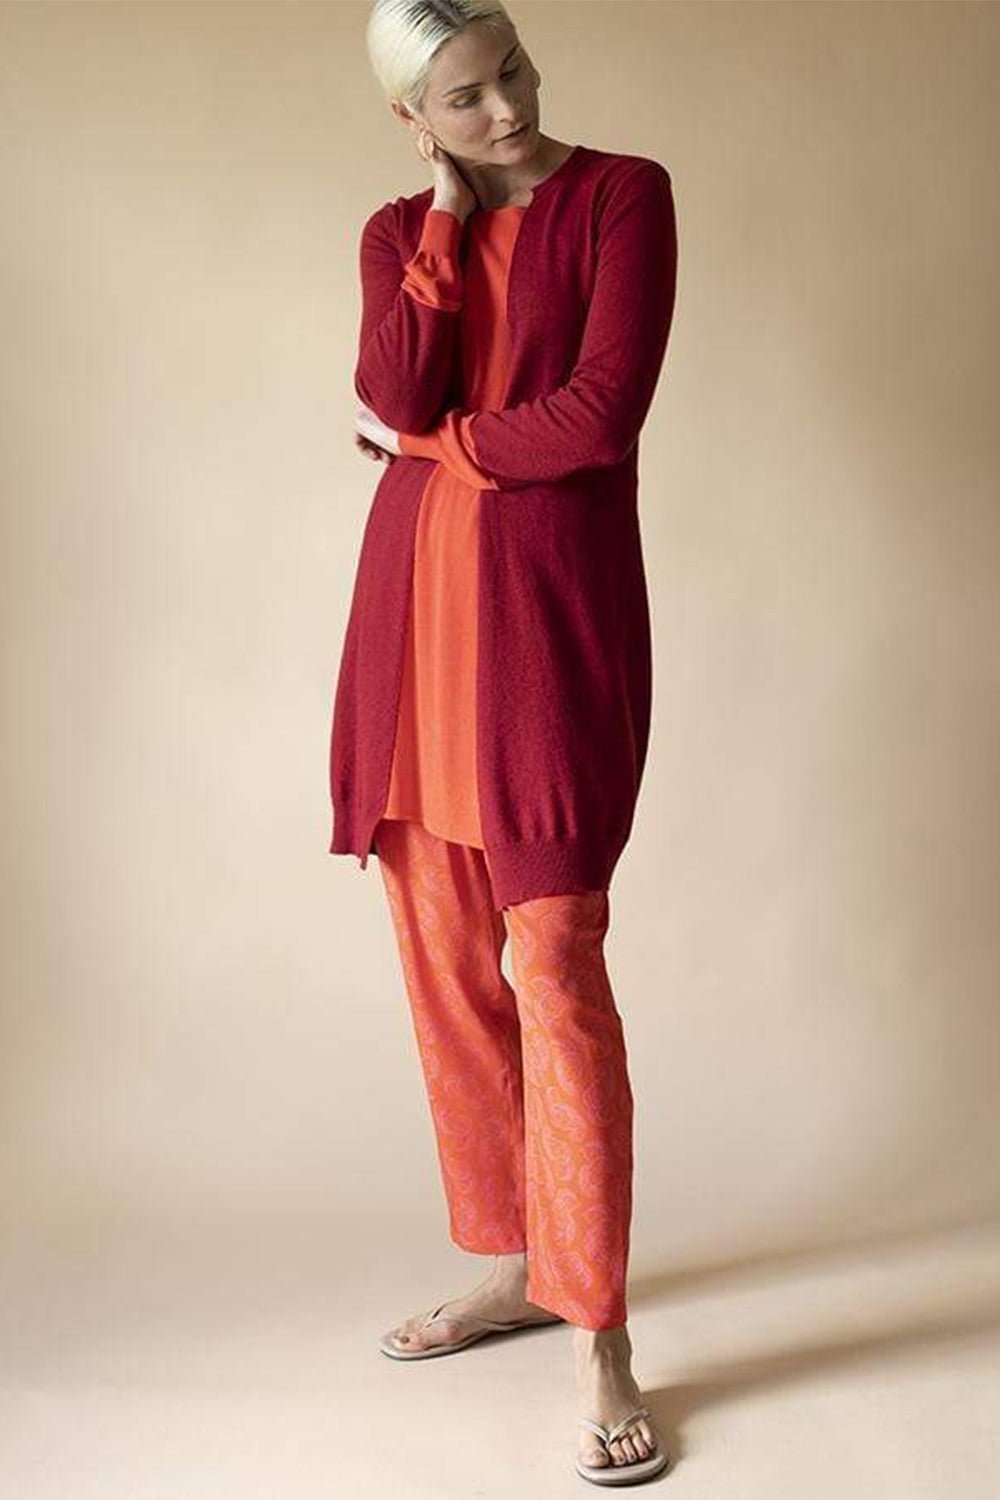 STELLA MCCARTNEY-Contrast Panel Knit Dress-RED